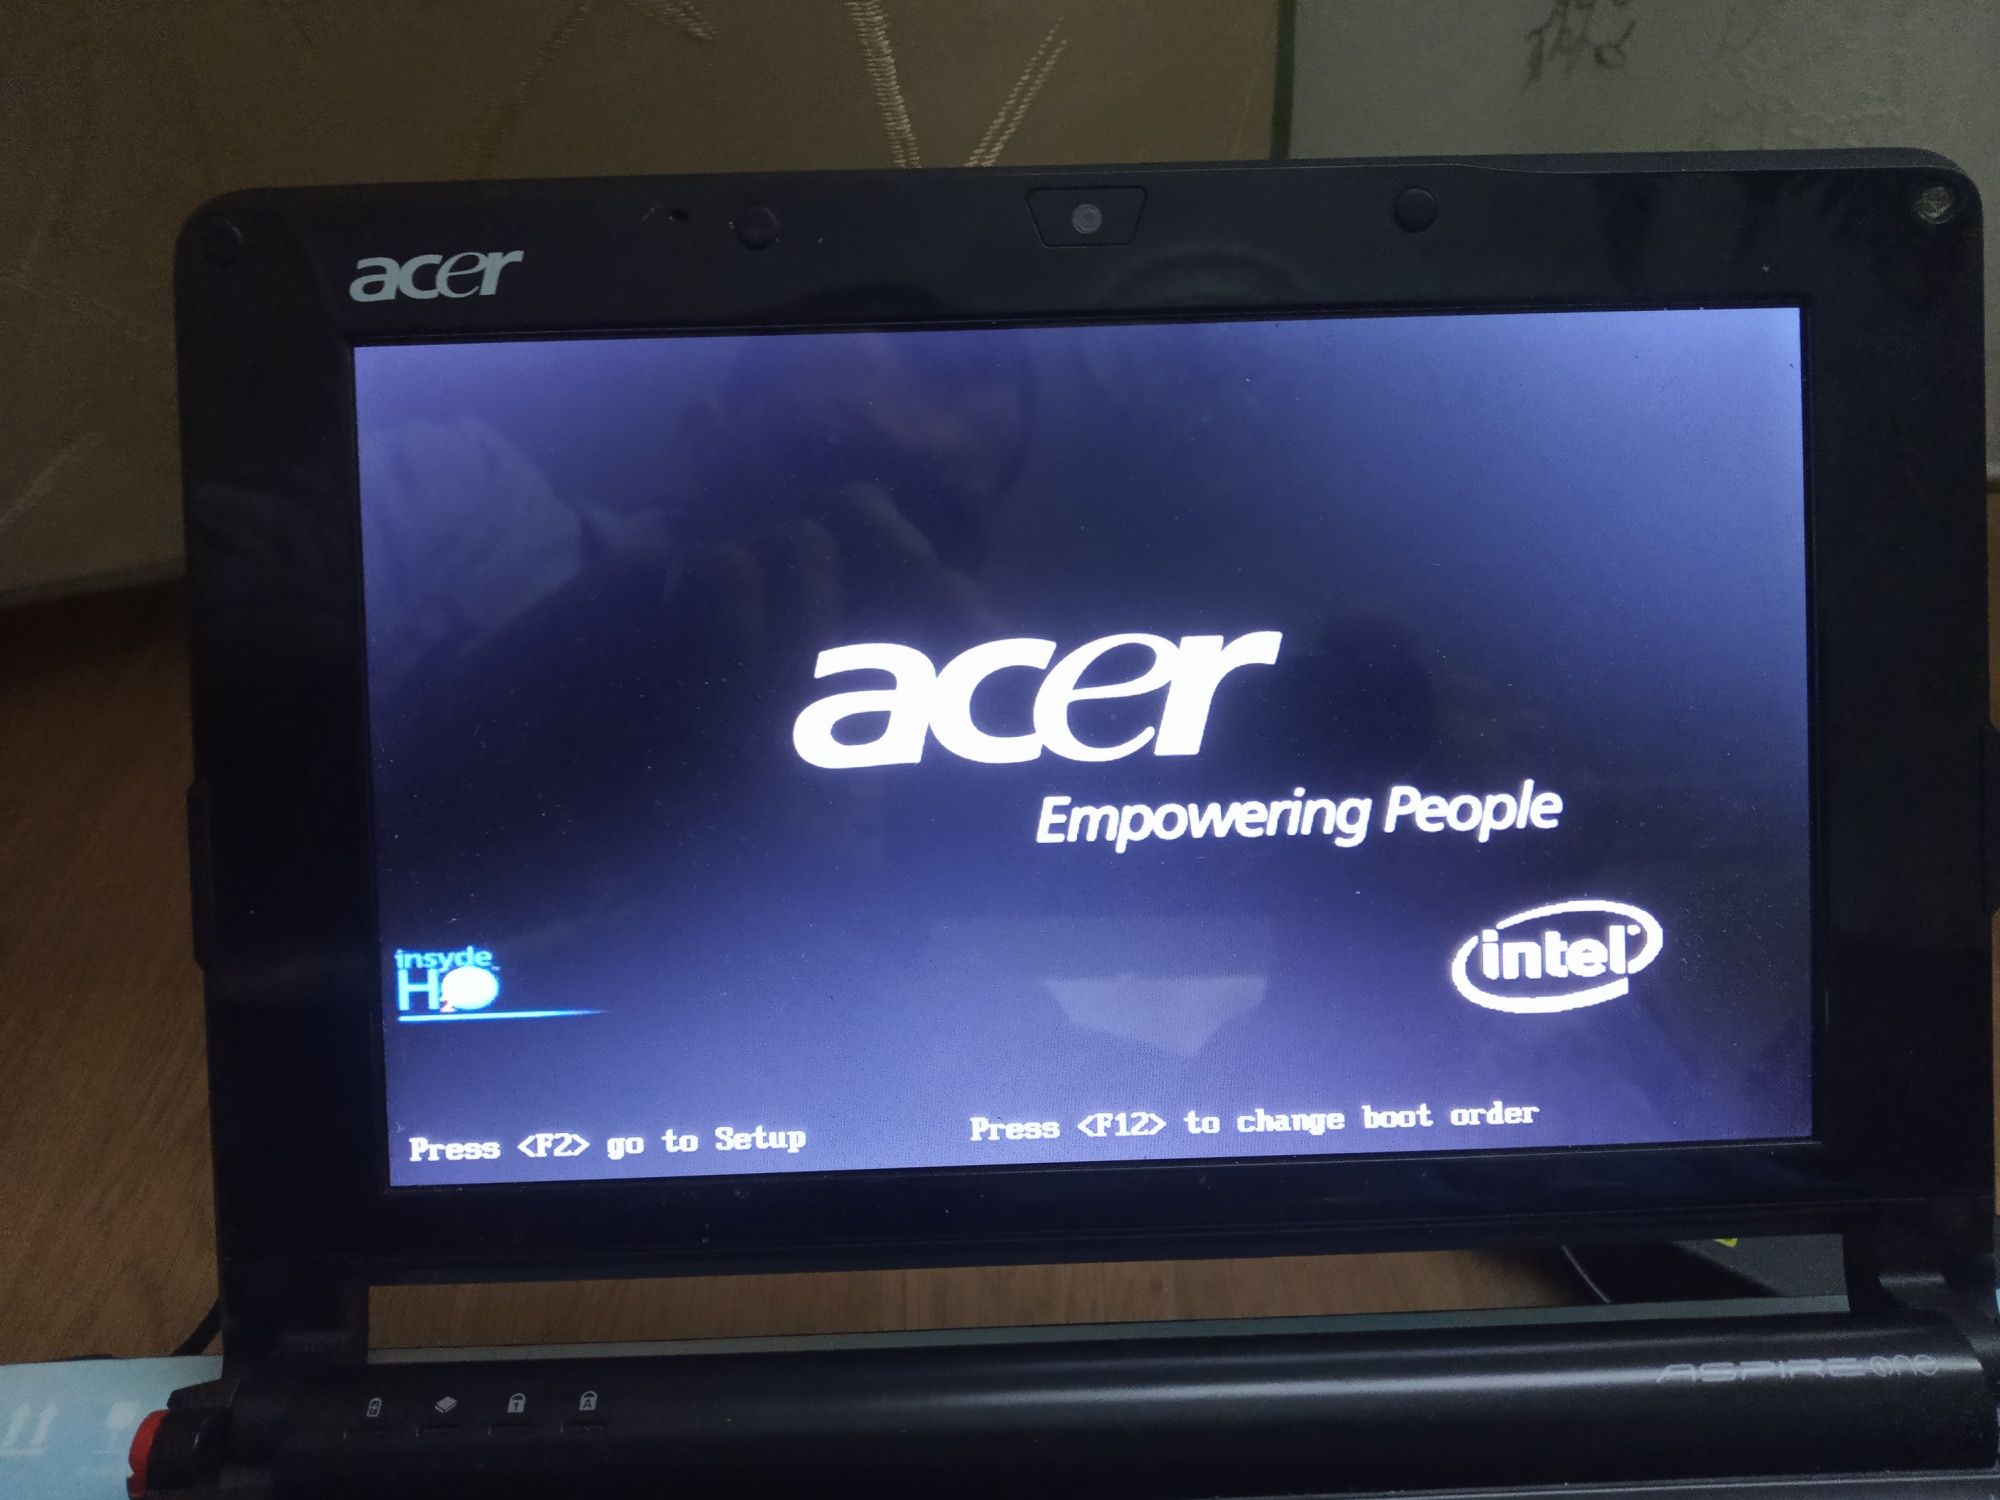 Нетбук Acer 1.5Gb 160Gb